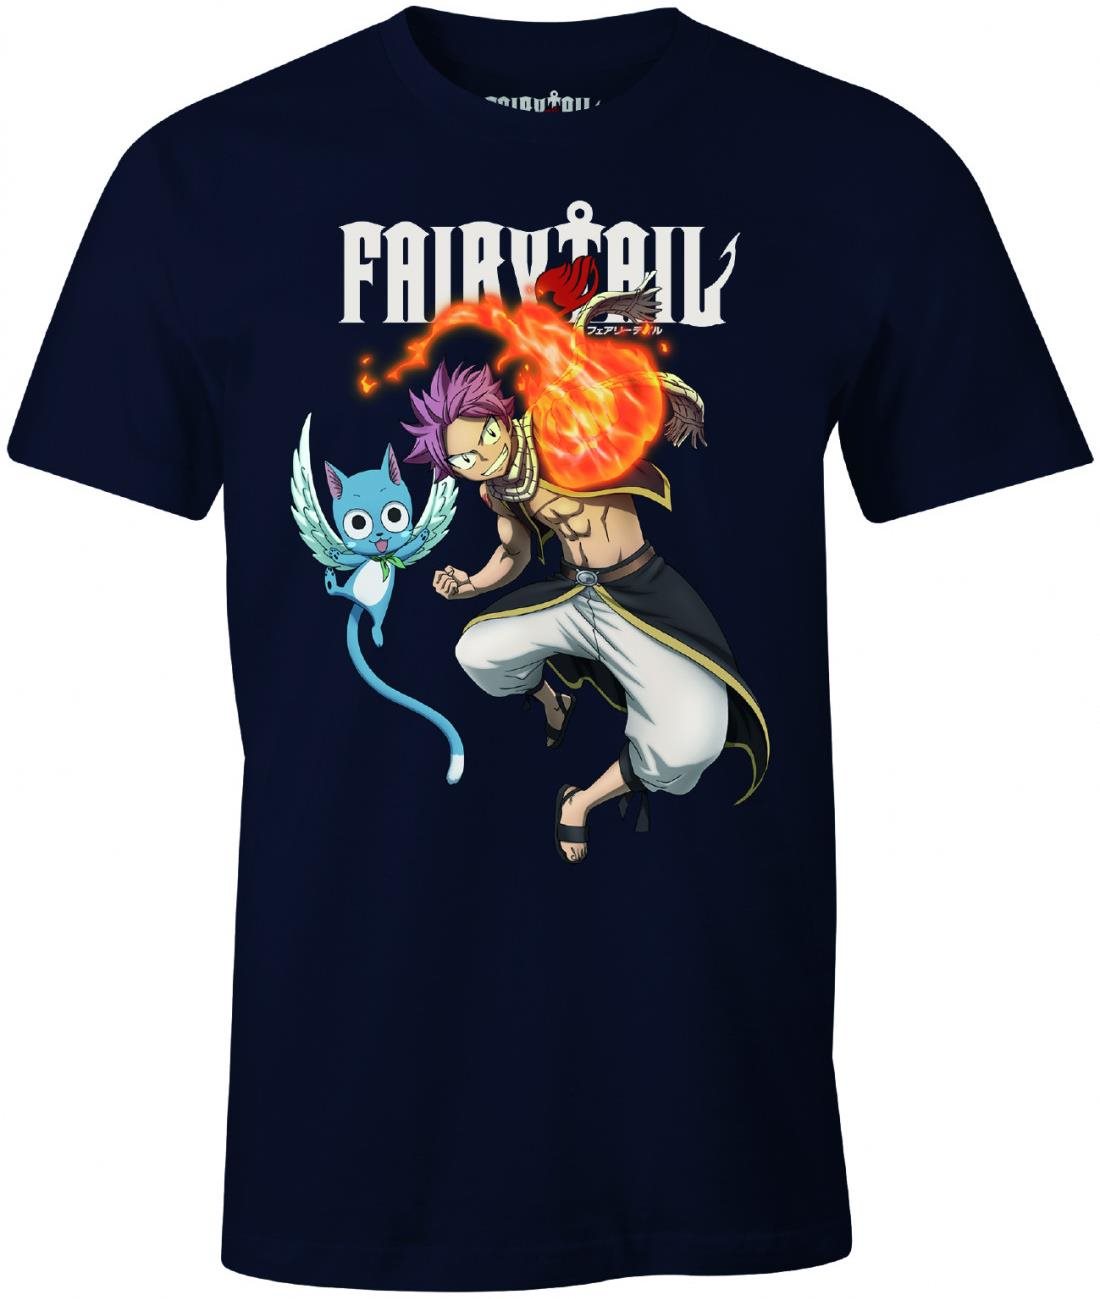 Fairy Tail - Attack of Fairy - póló